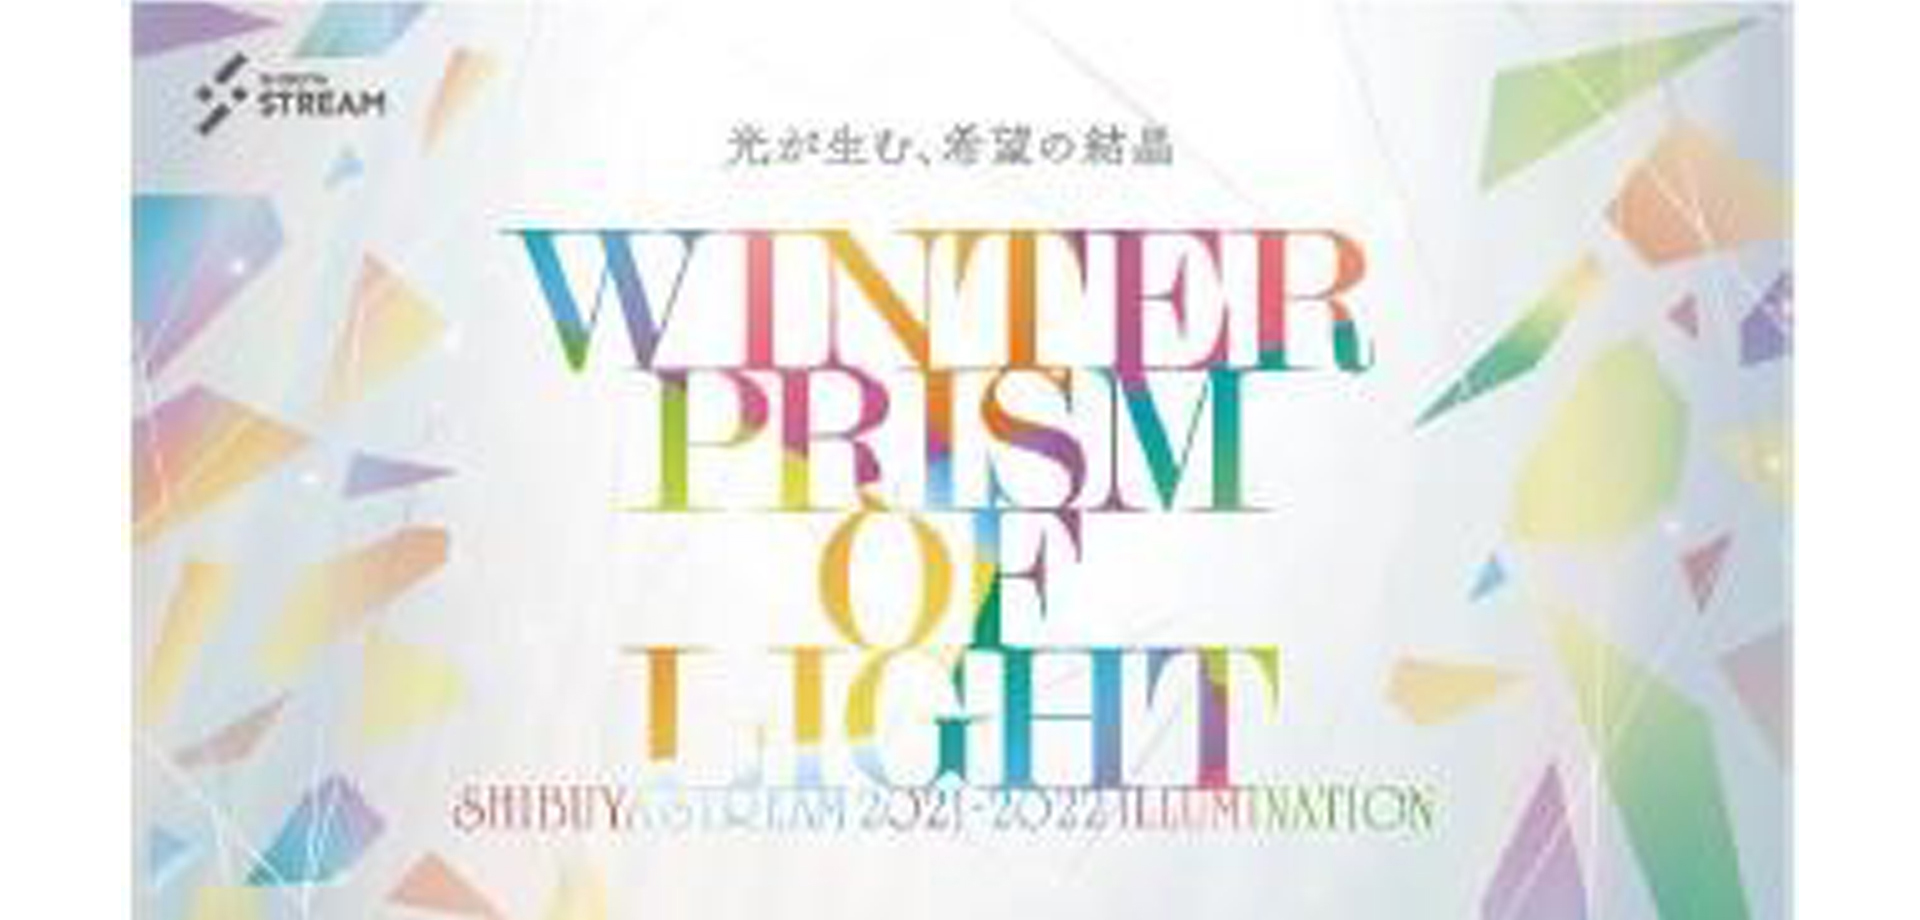 WINTER PRISM OF LIGHT～明日へつながる未来への希望～ 渋谷ストリーム